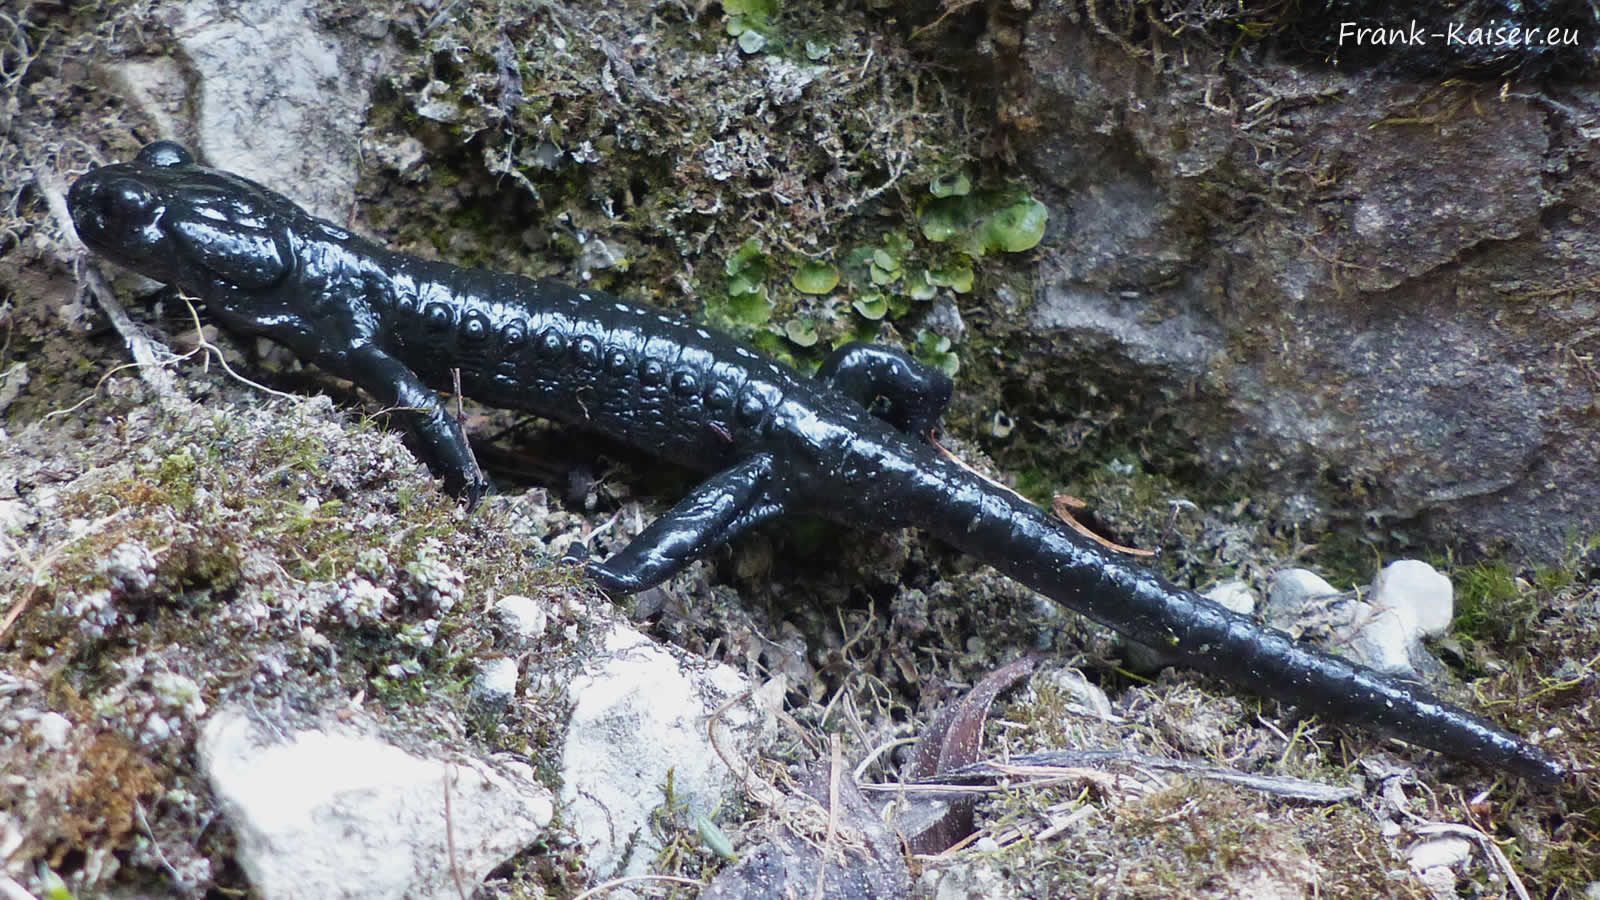 Alpensalamander (Salamandra atra)